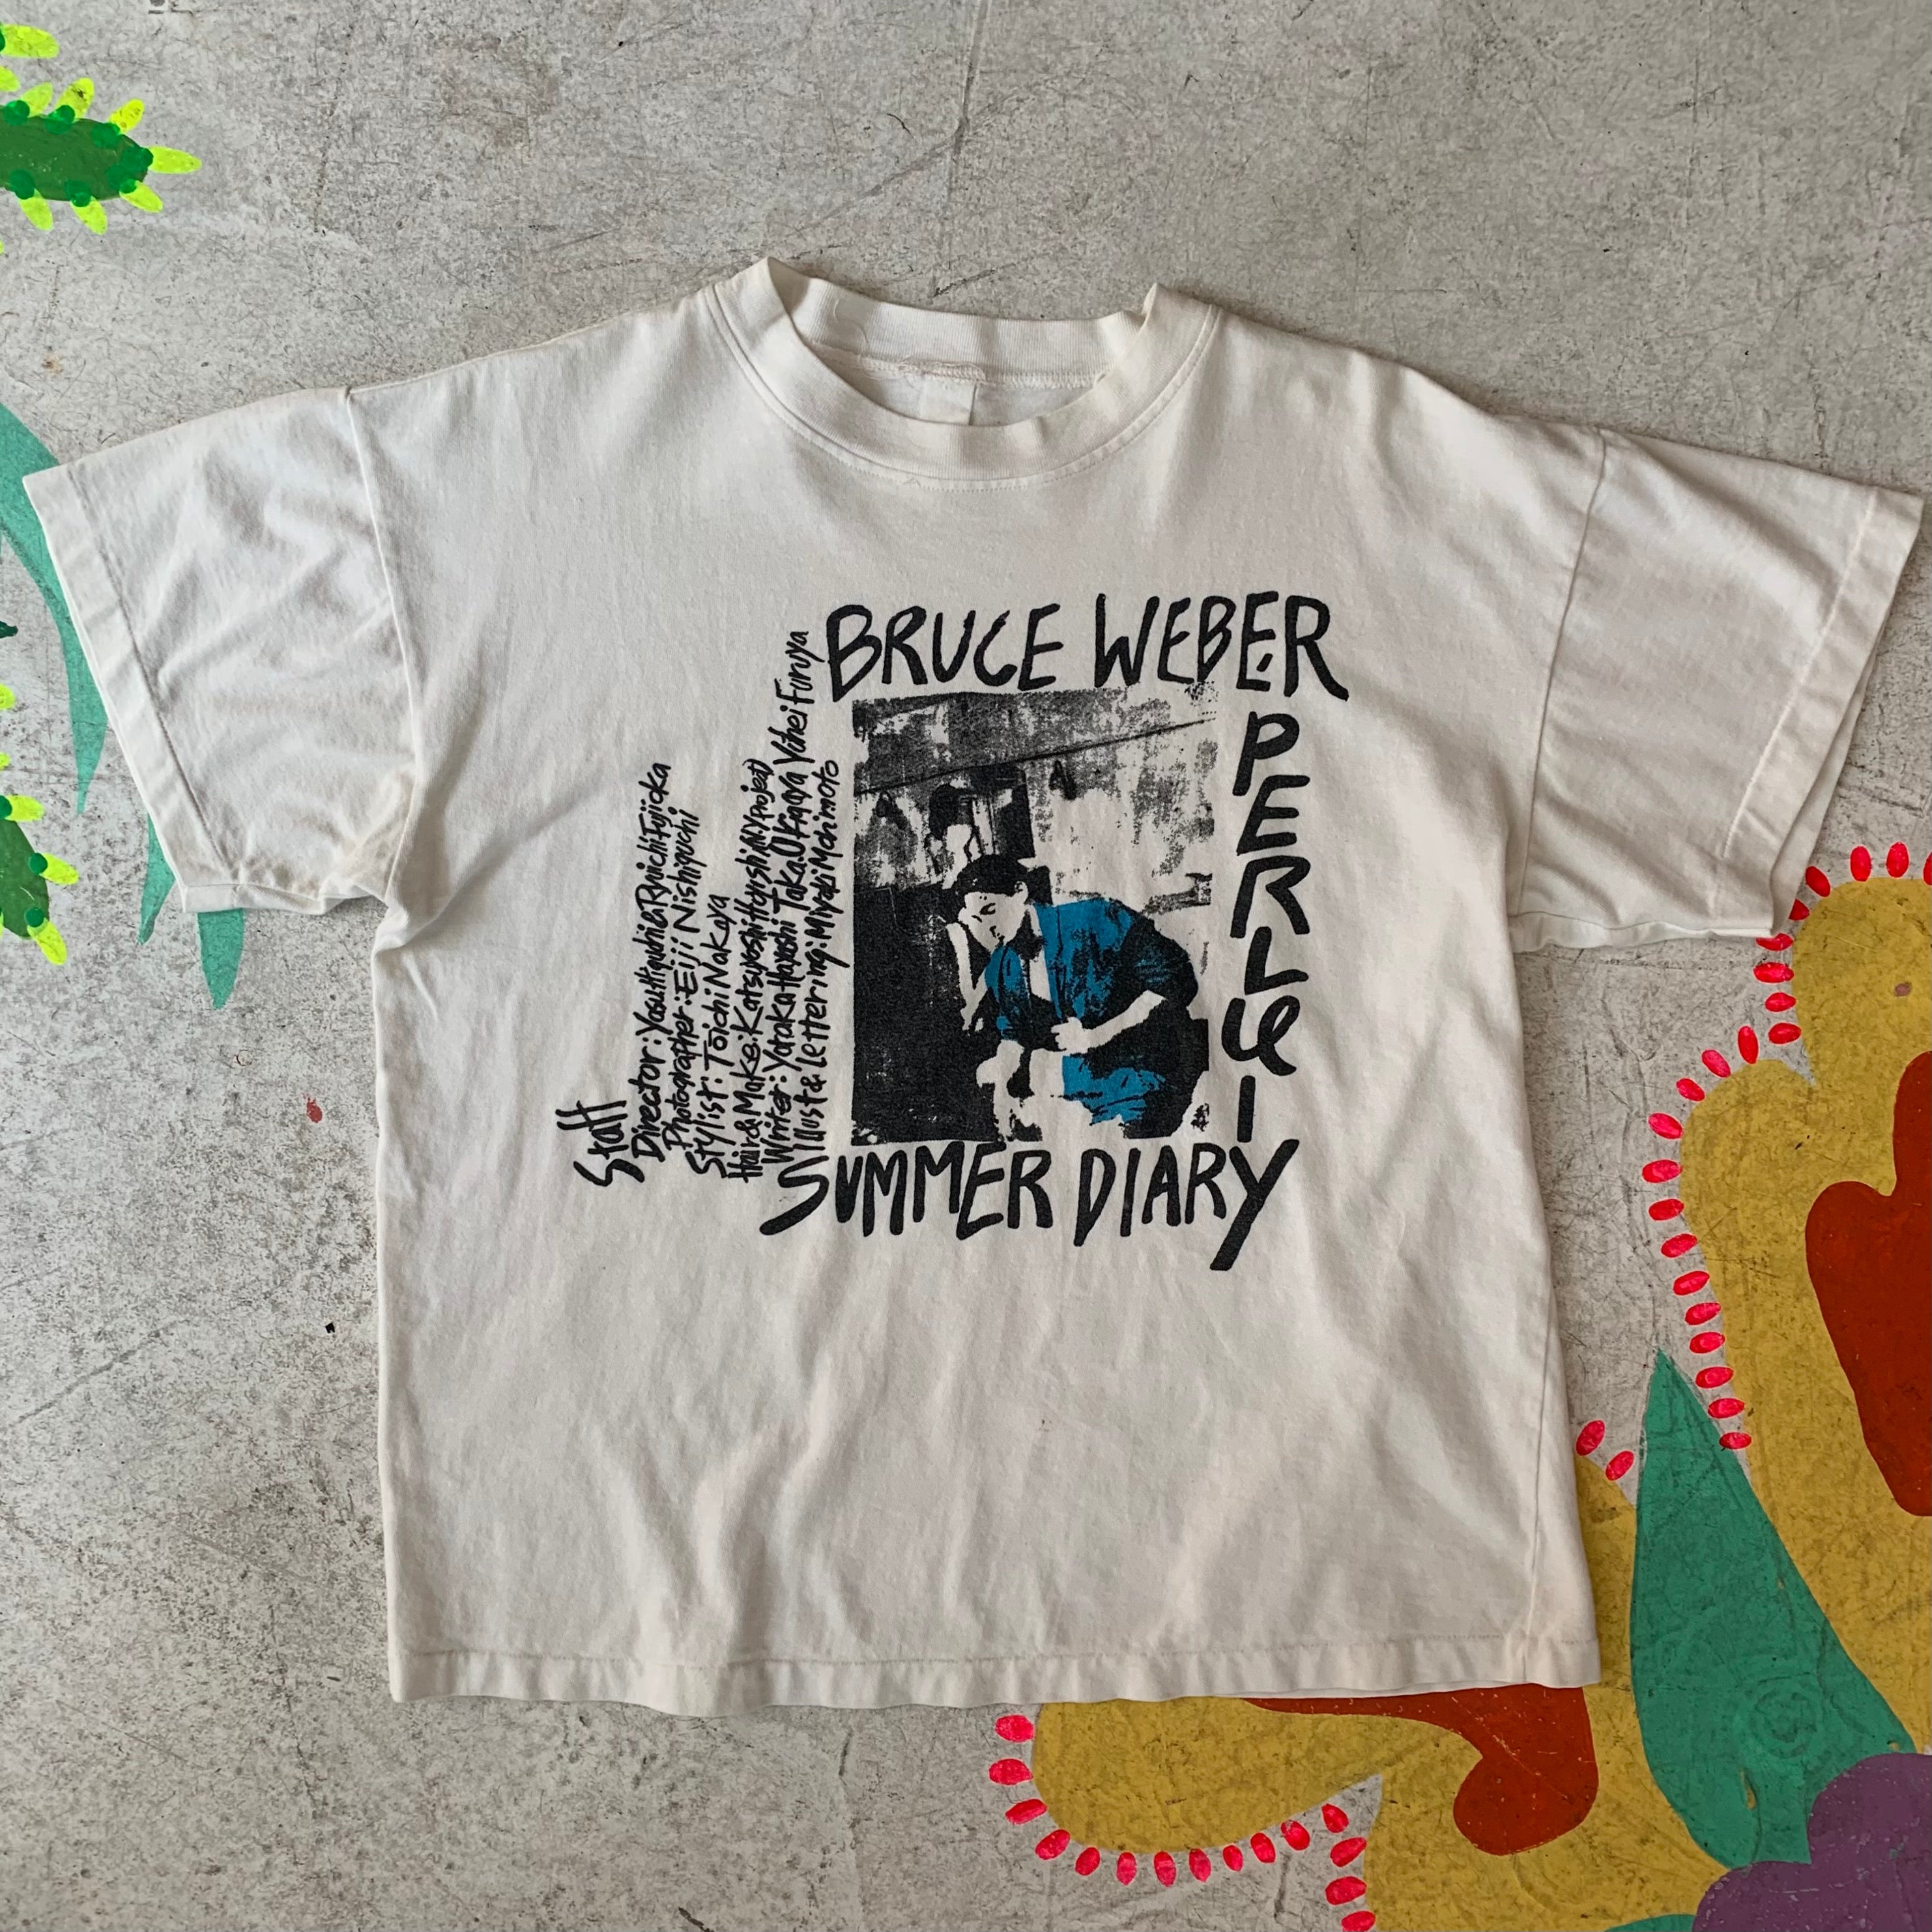 1980s Bruce Weber “Summer Diary” Tee – VACATION SF